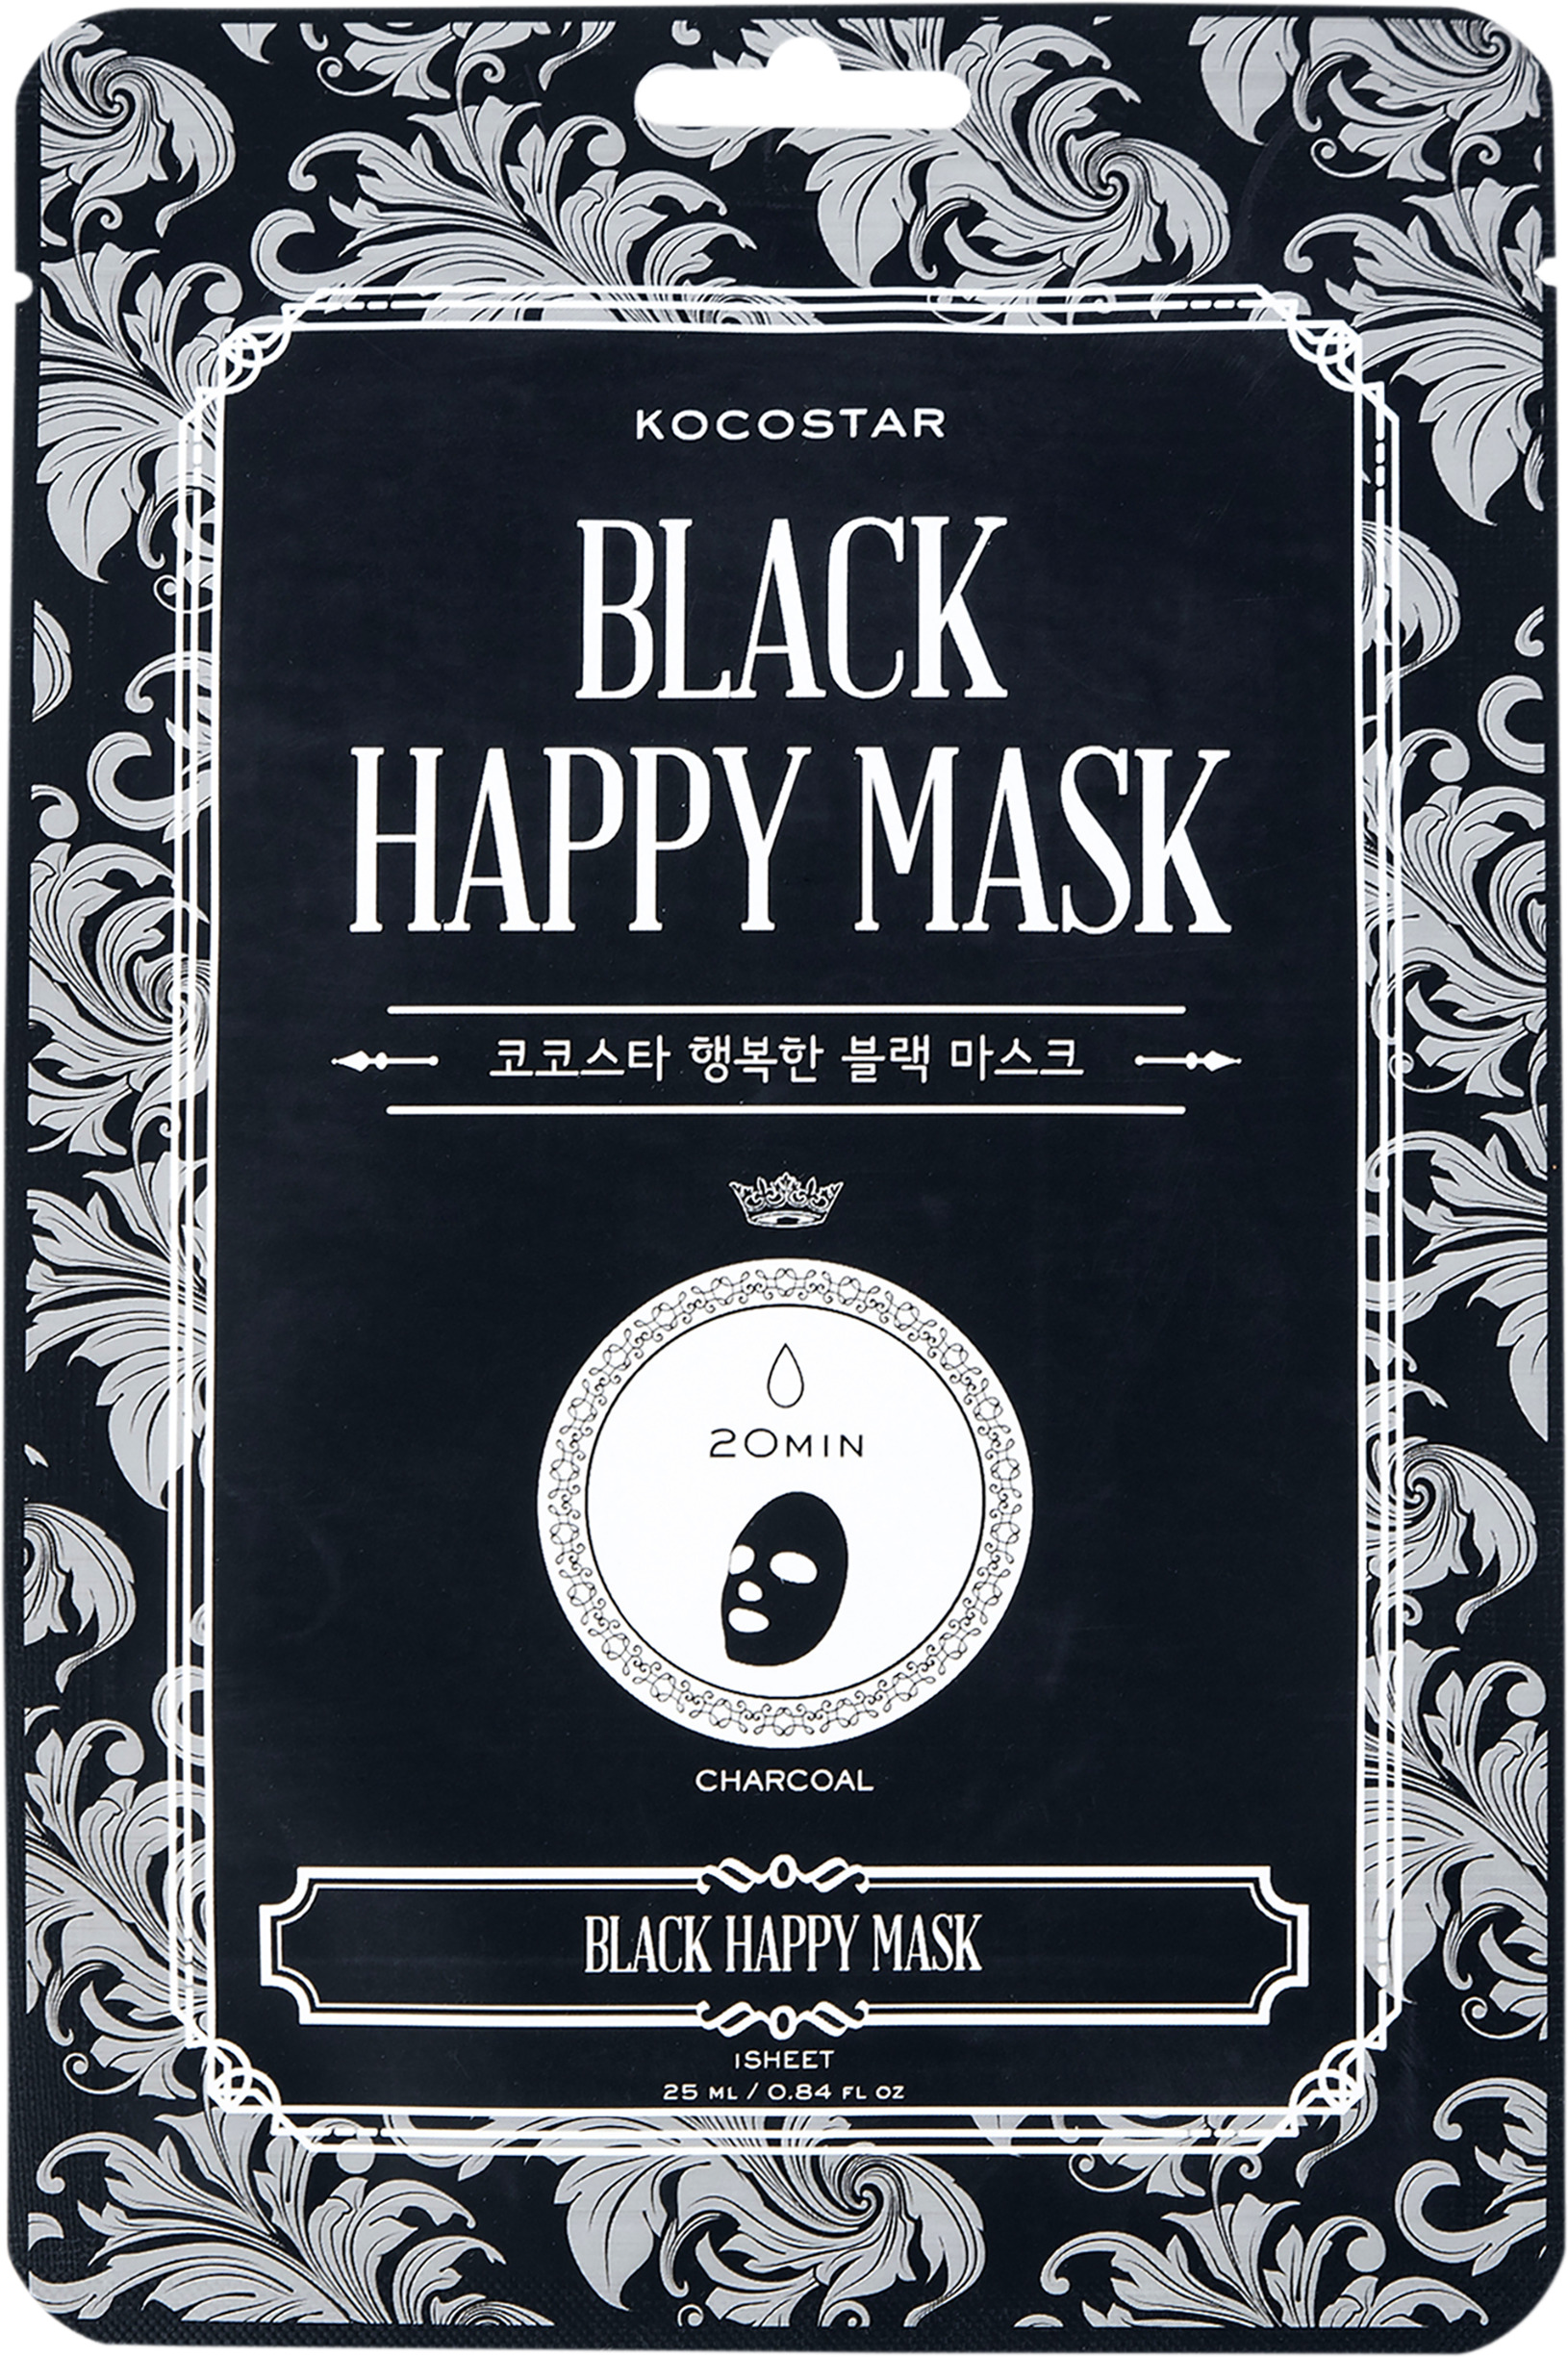 KOCOSTAR Black Happy Mask 1 st